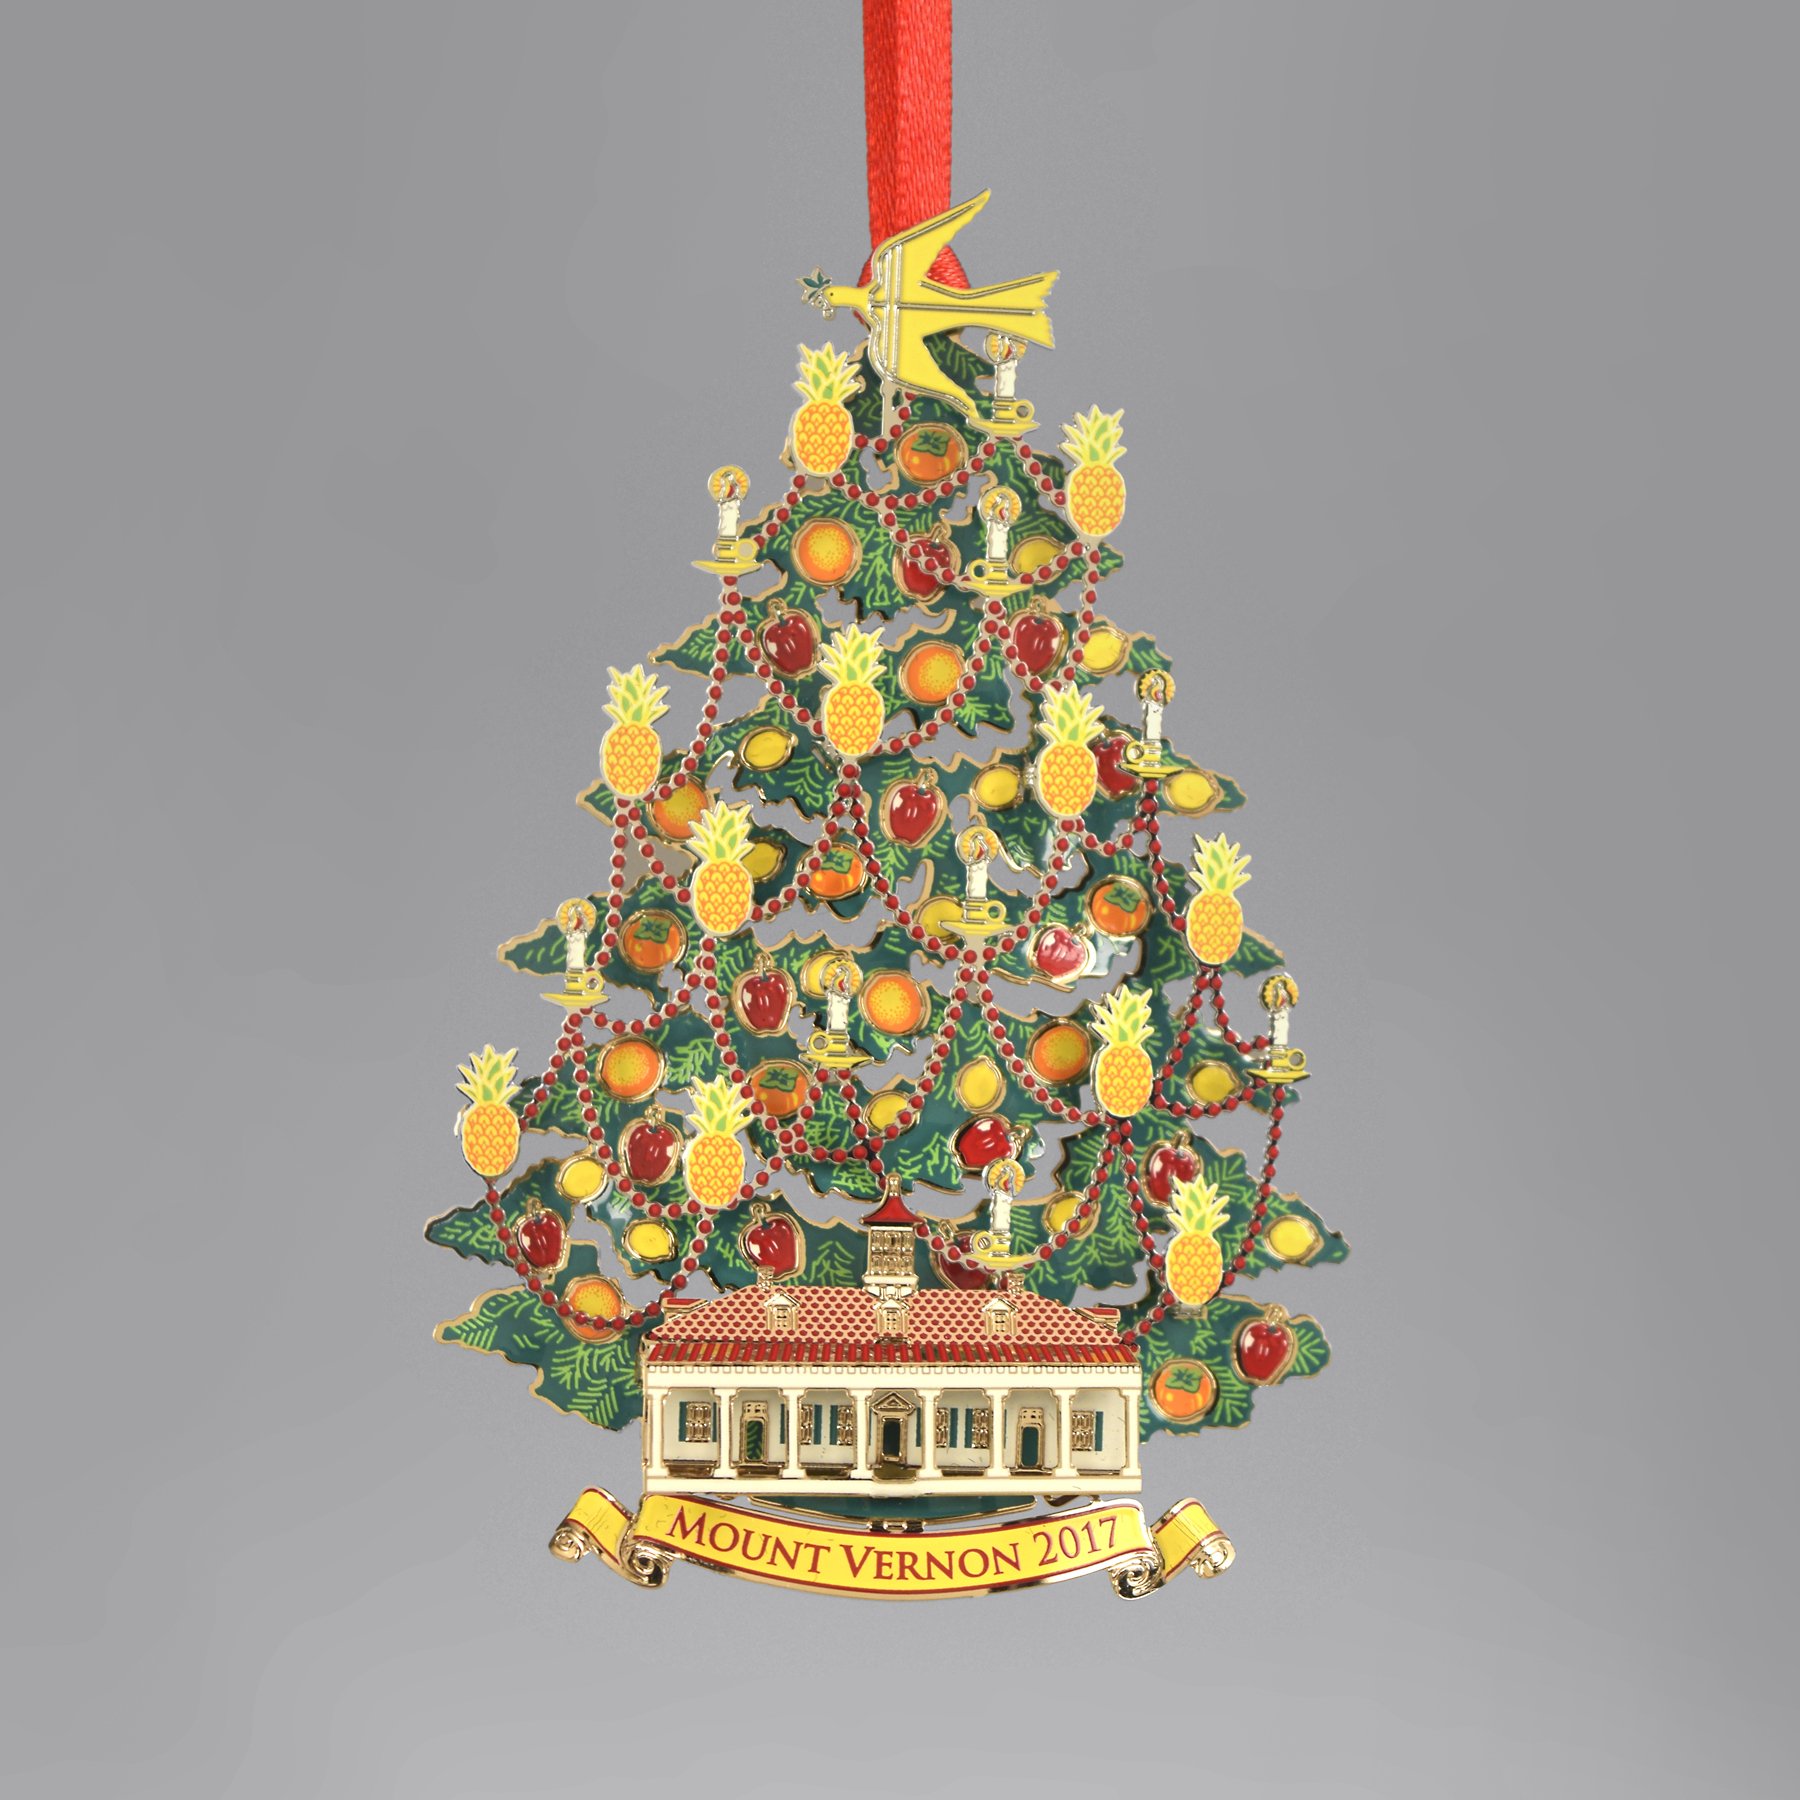 Mount Vernon 2017 Annual Ornament – The Shops at Mount Vernon